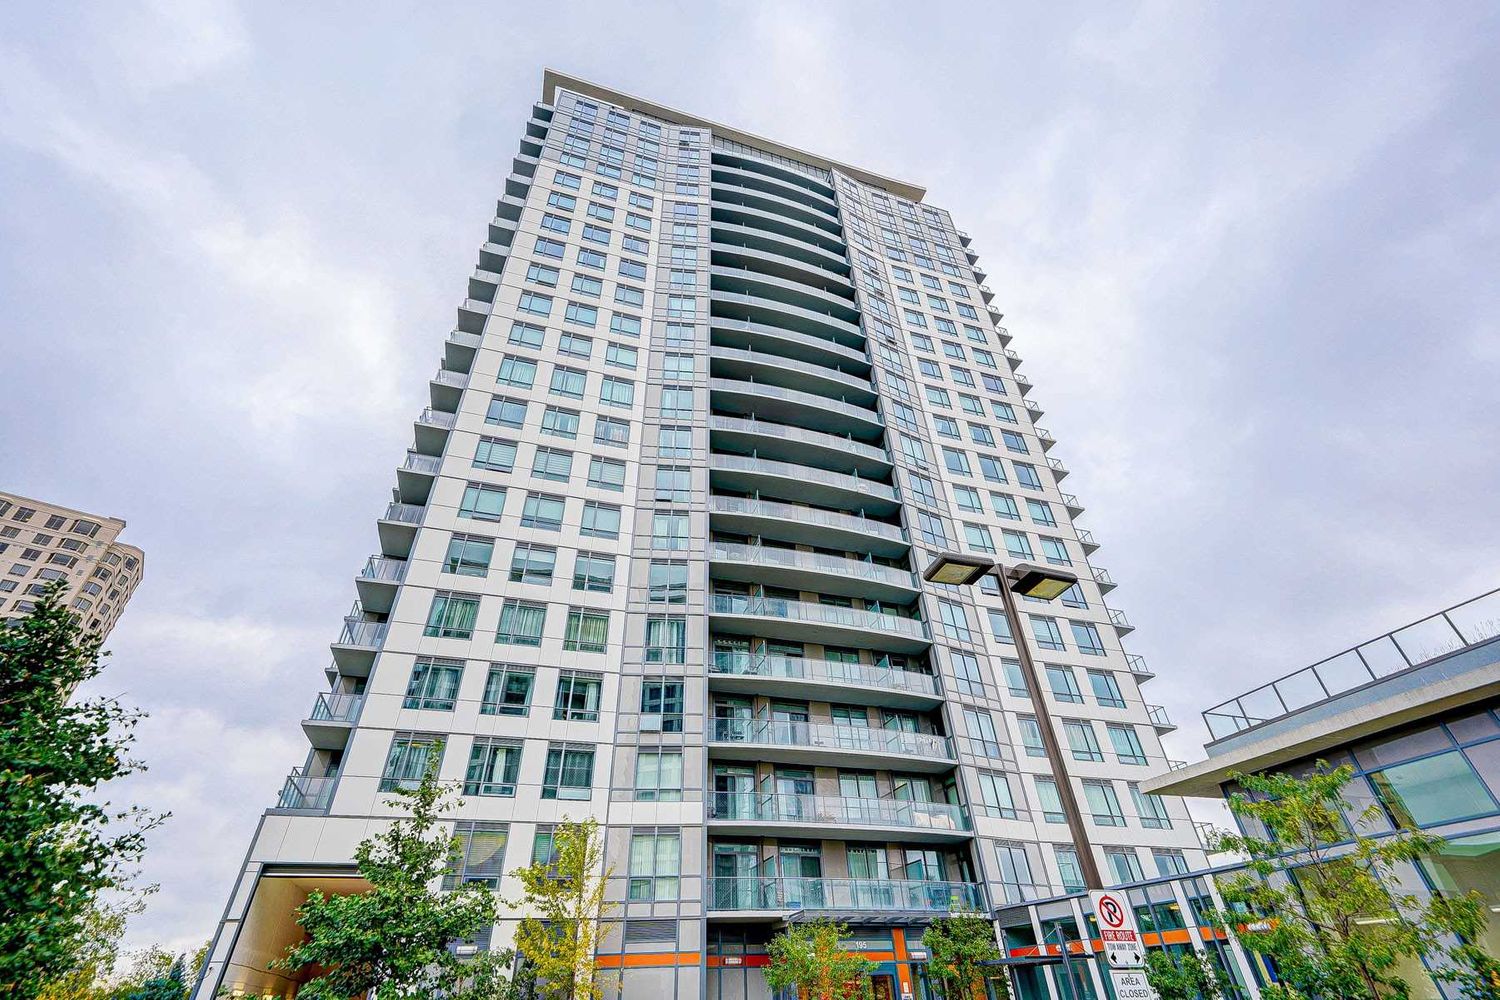 195 Bonis Avenue. JOY Condos is located in  Scarborough, Toronto - image #2 of 3